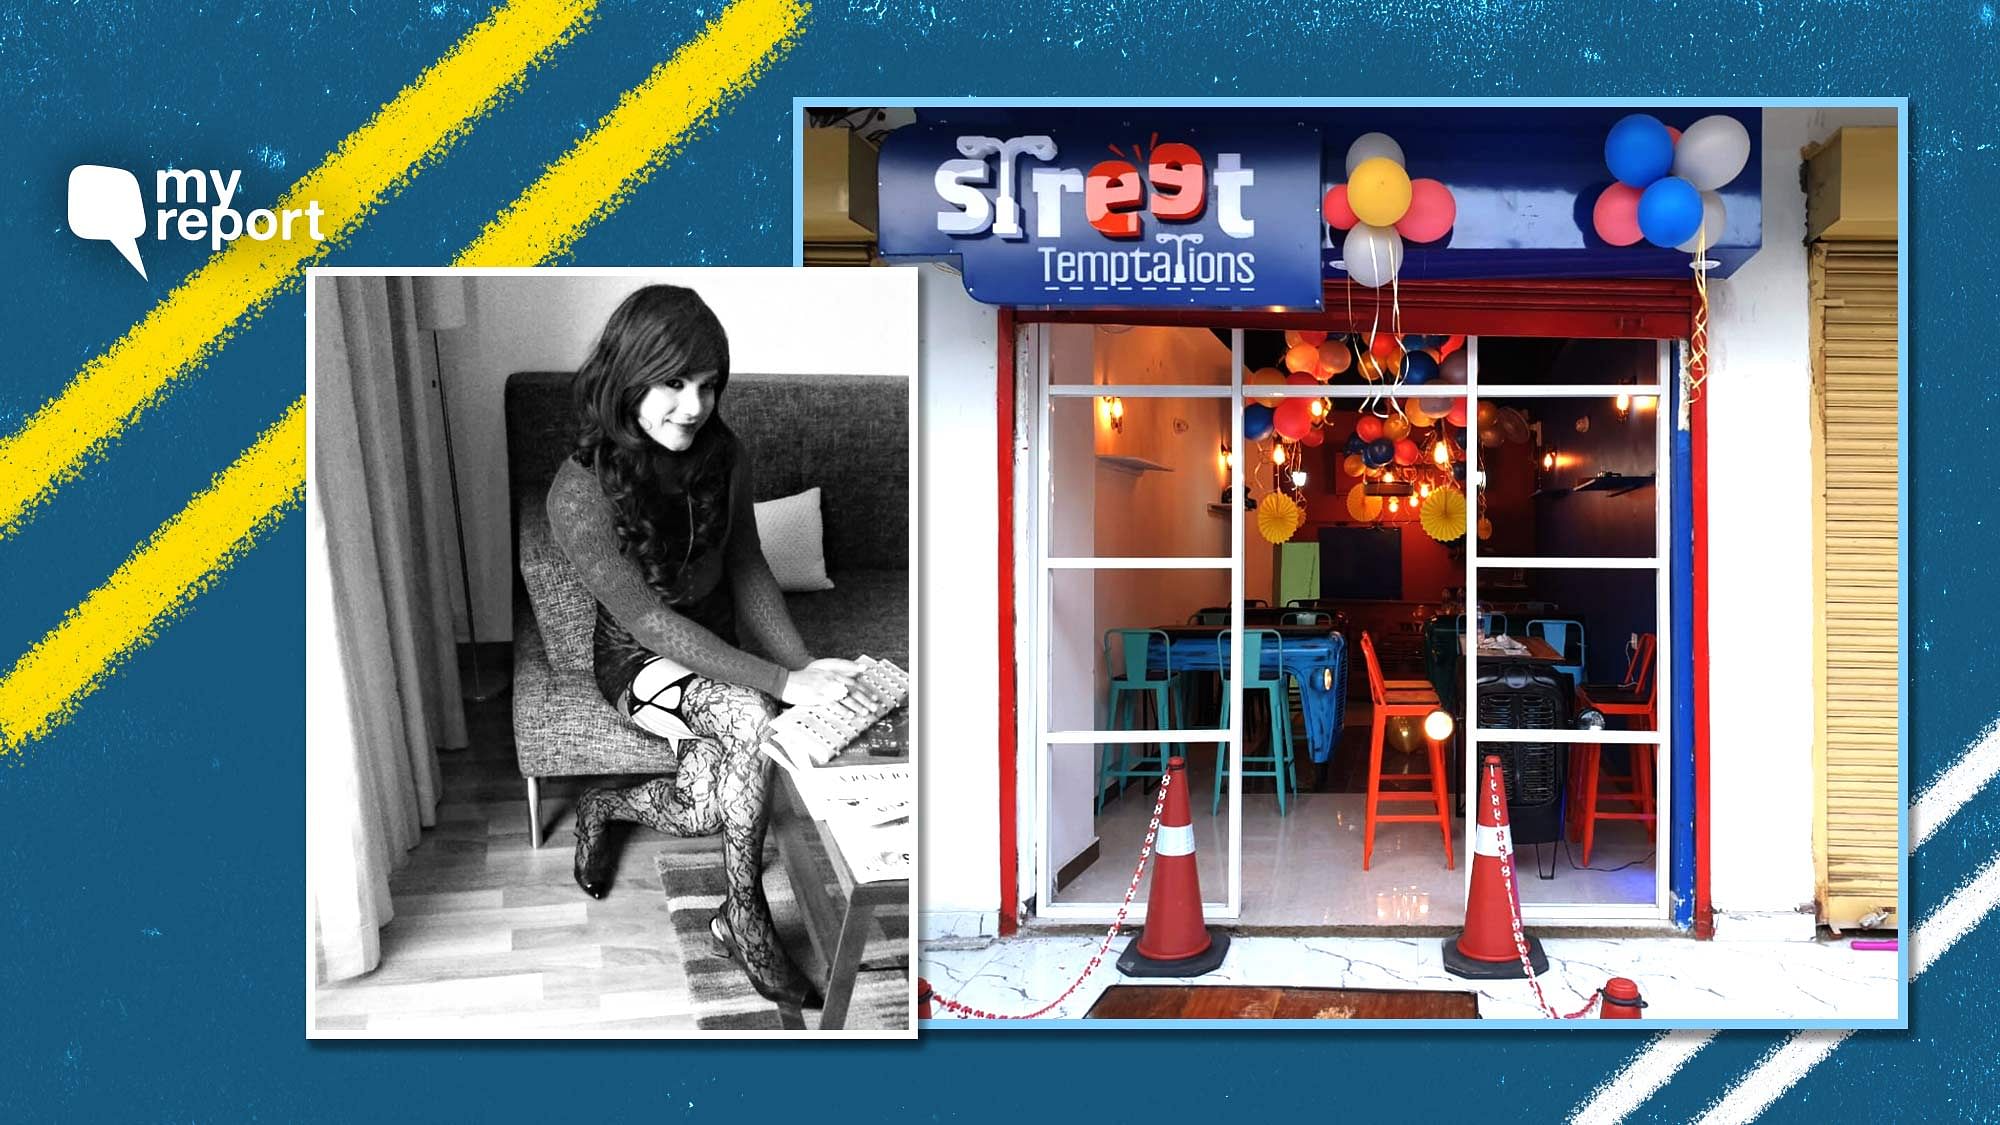 Urooz runs a small restaurant in Noida, UP.